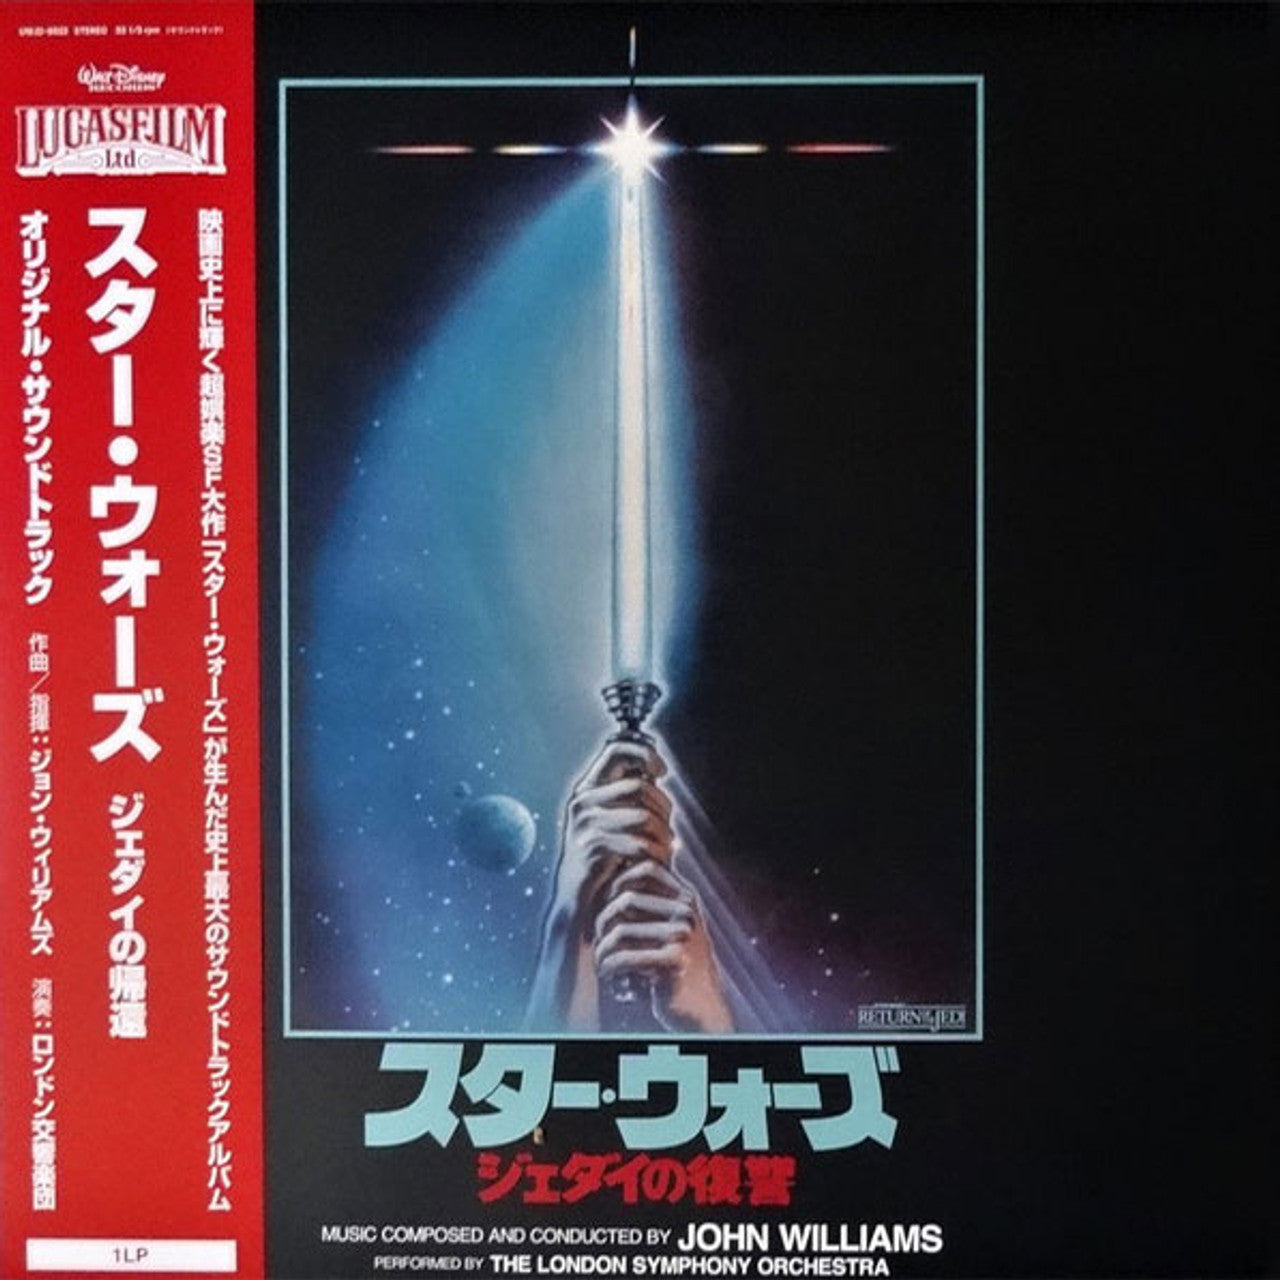 Star Wars: Return of the Jedi (Japanese Version) Import LP - John Williams